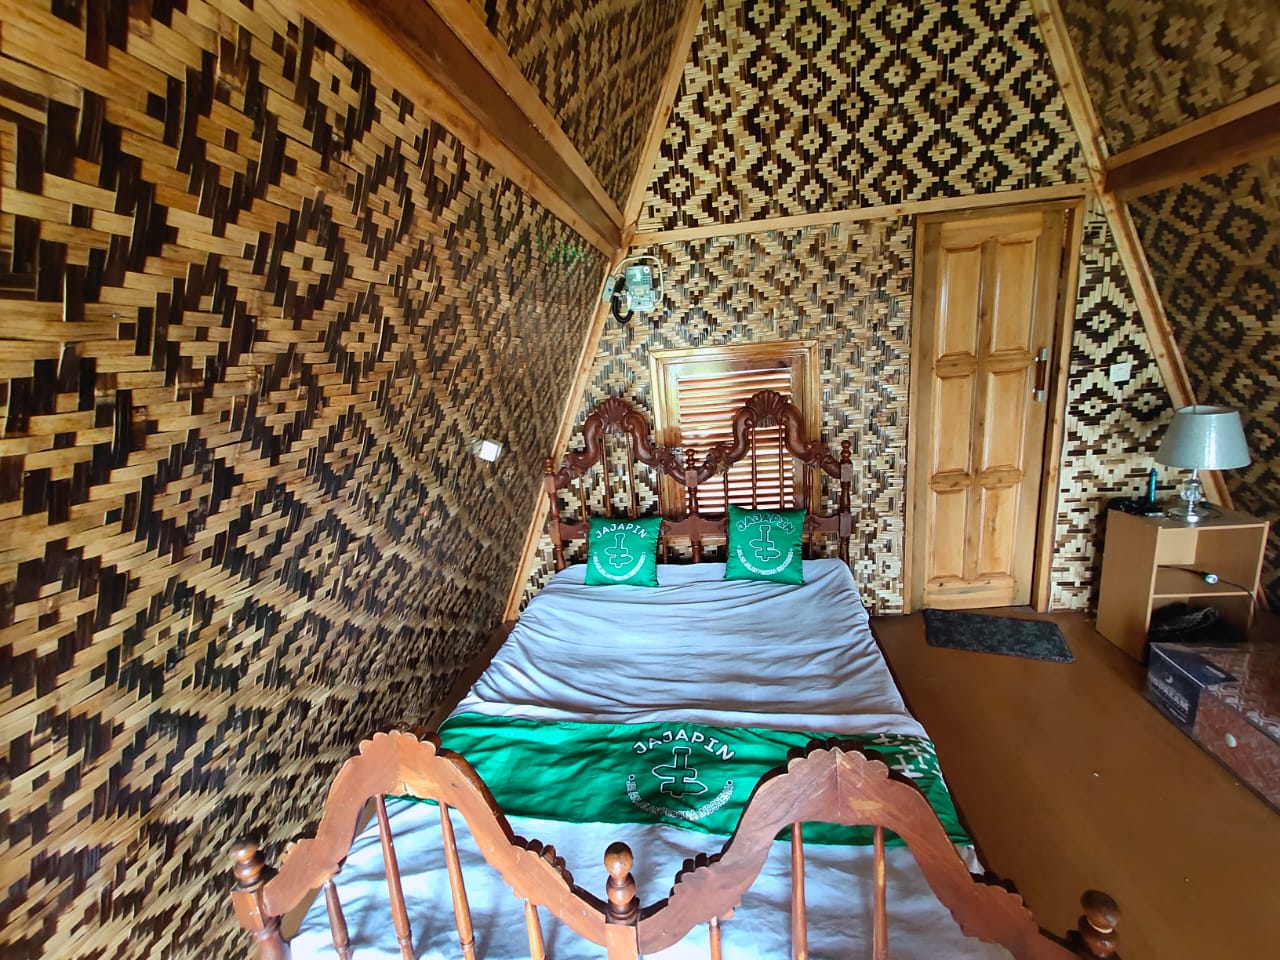 Bedroom 2, Jajapin Wangsaloka Glamping, Tasikmalaya